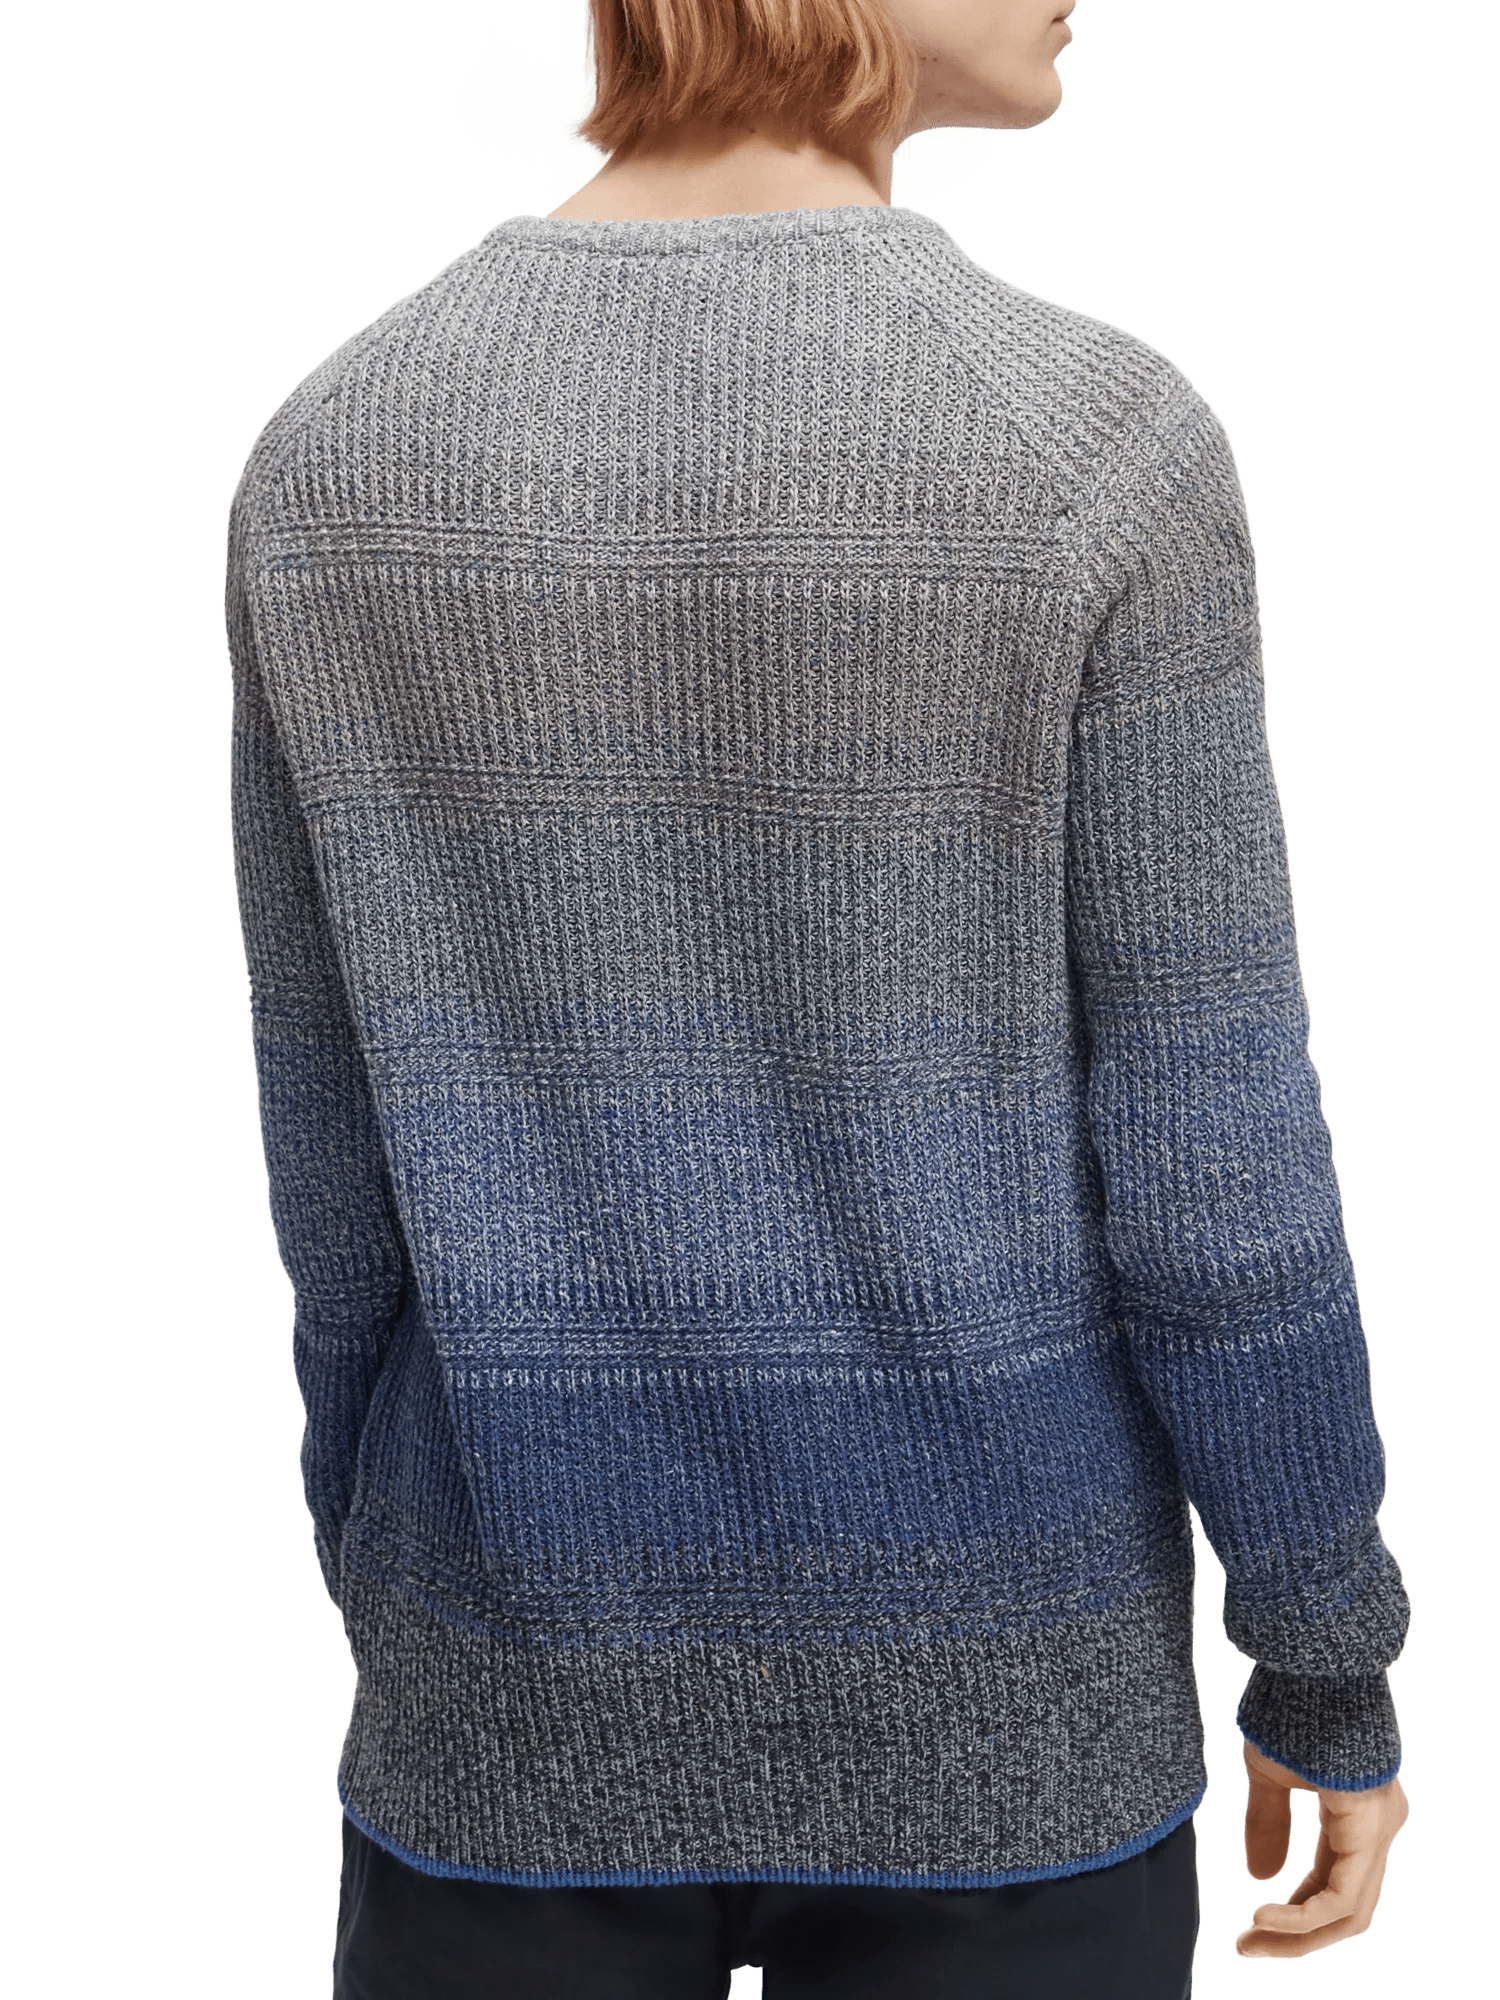 Scotch & Soda Eternal Blauw degrade knit in recycled denim NHD-BCK